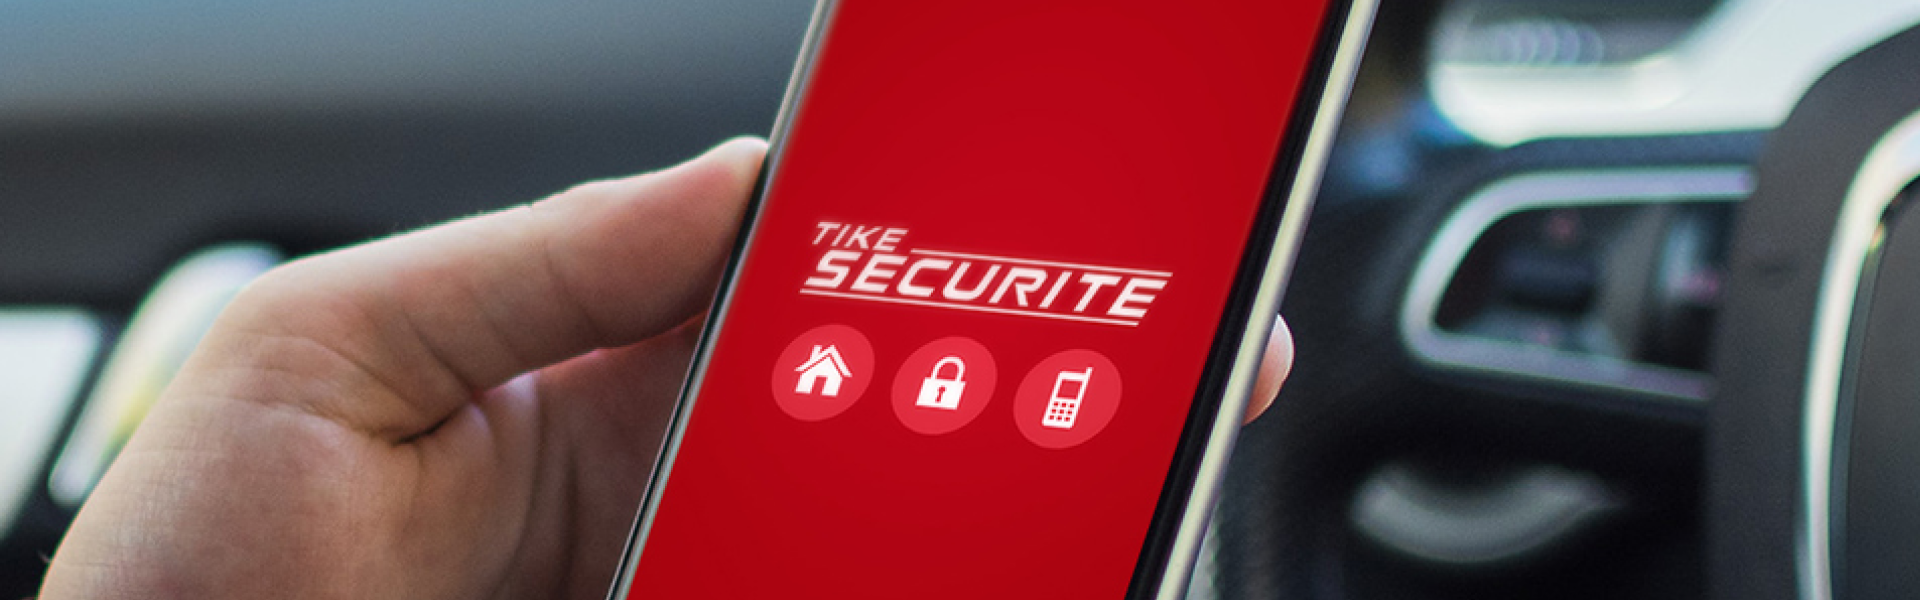 application mobile alarme Tike Sécurité